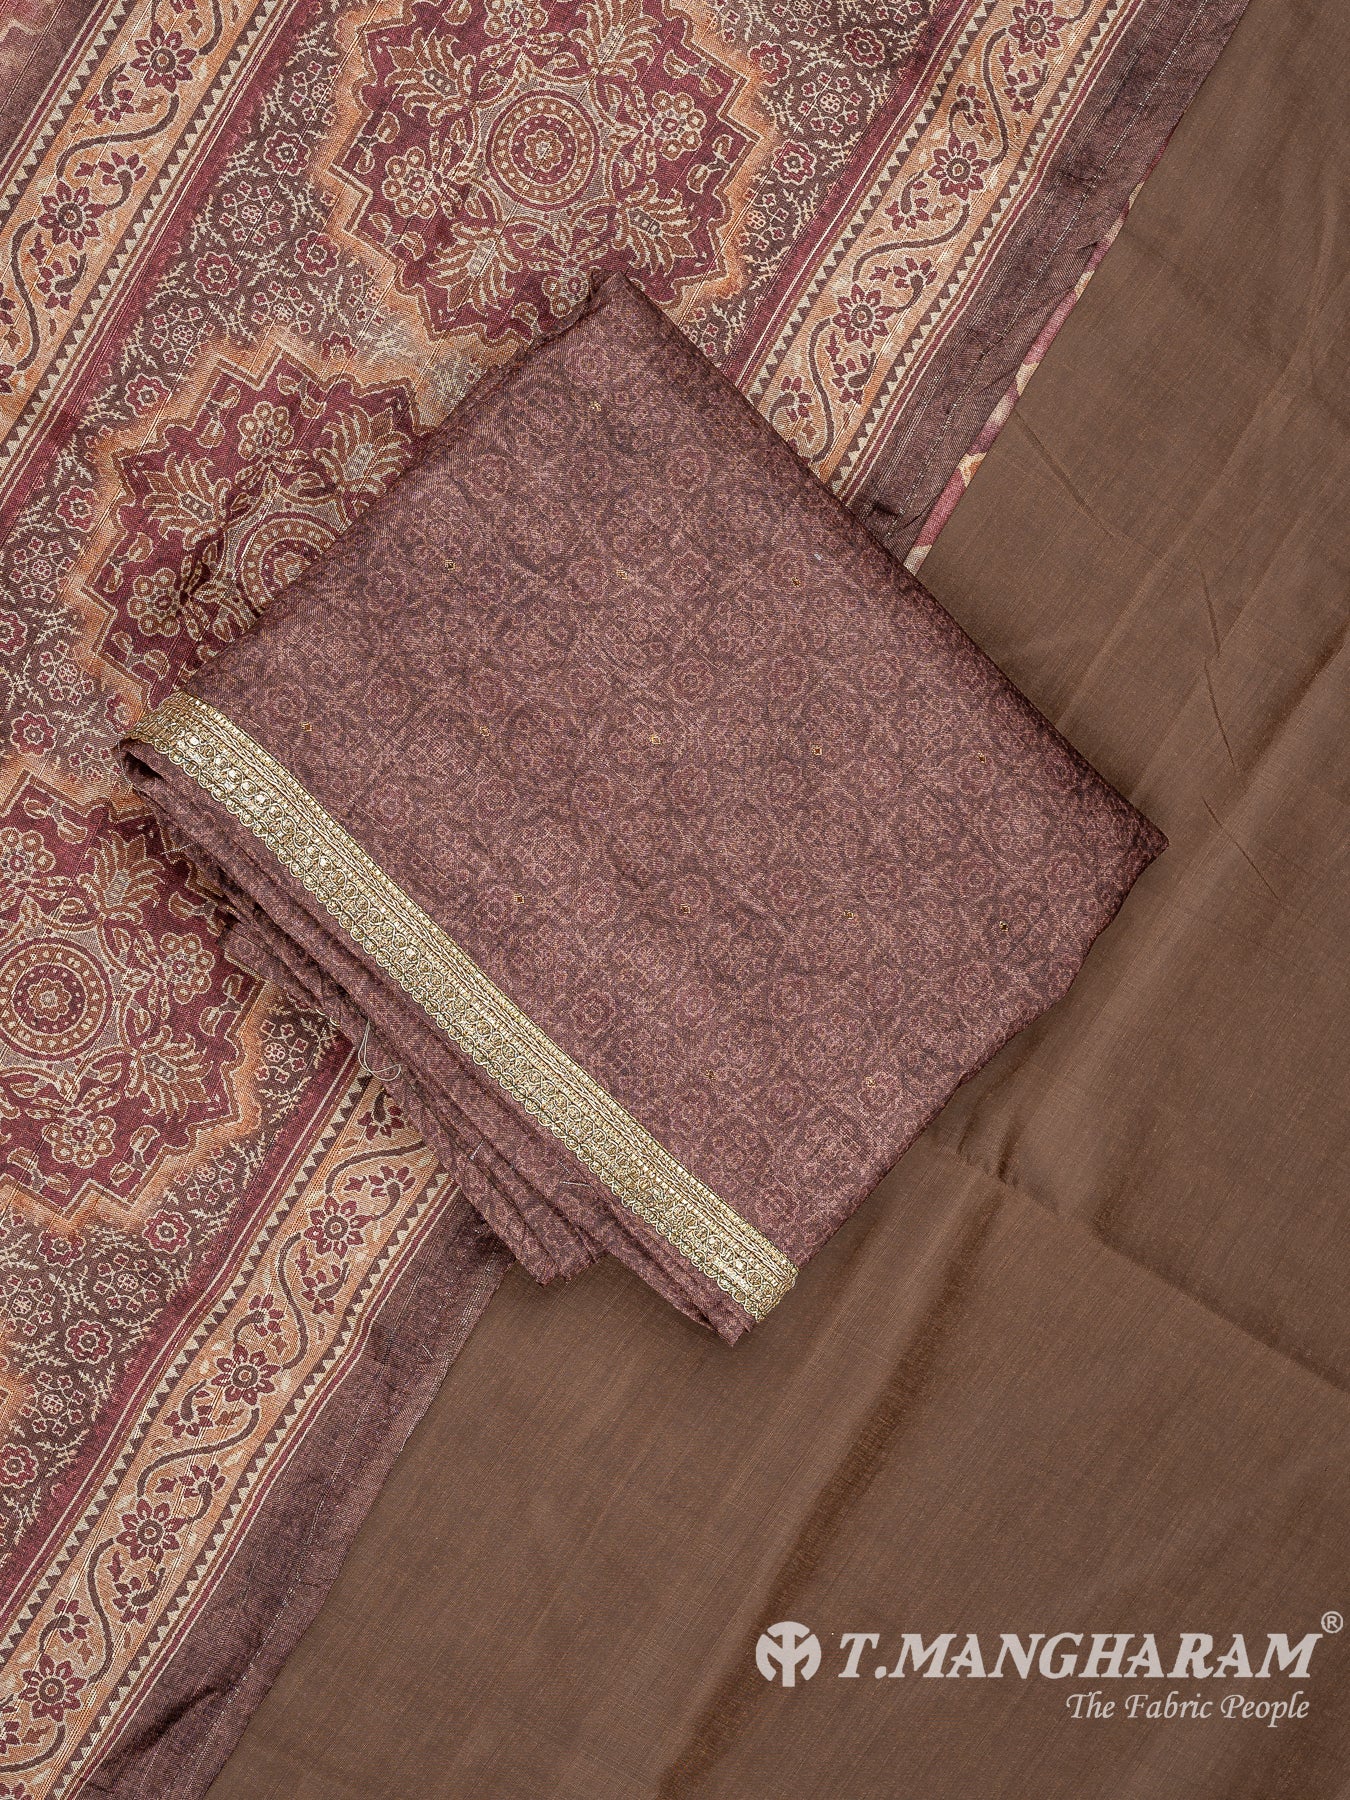 Brown Silk Cotton Chudidhar Fabric Set - EG1840 view-1